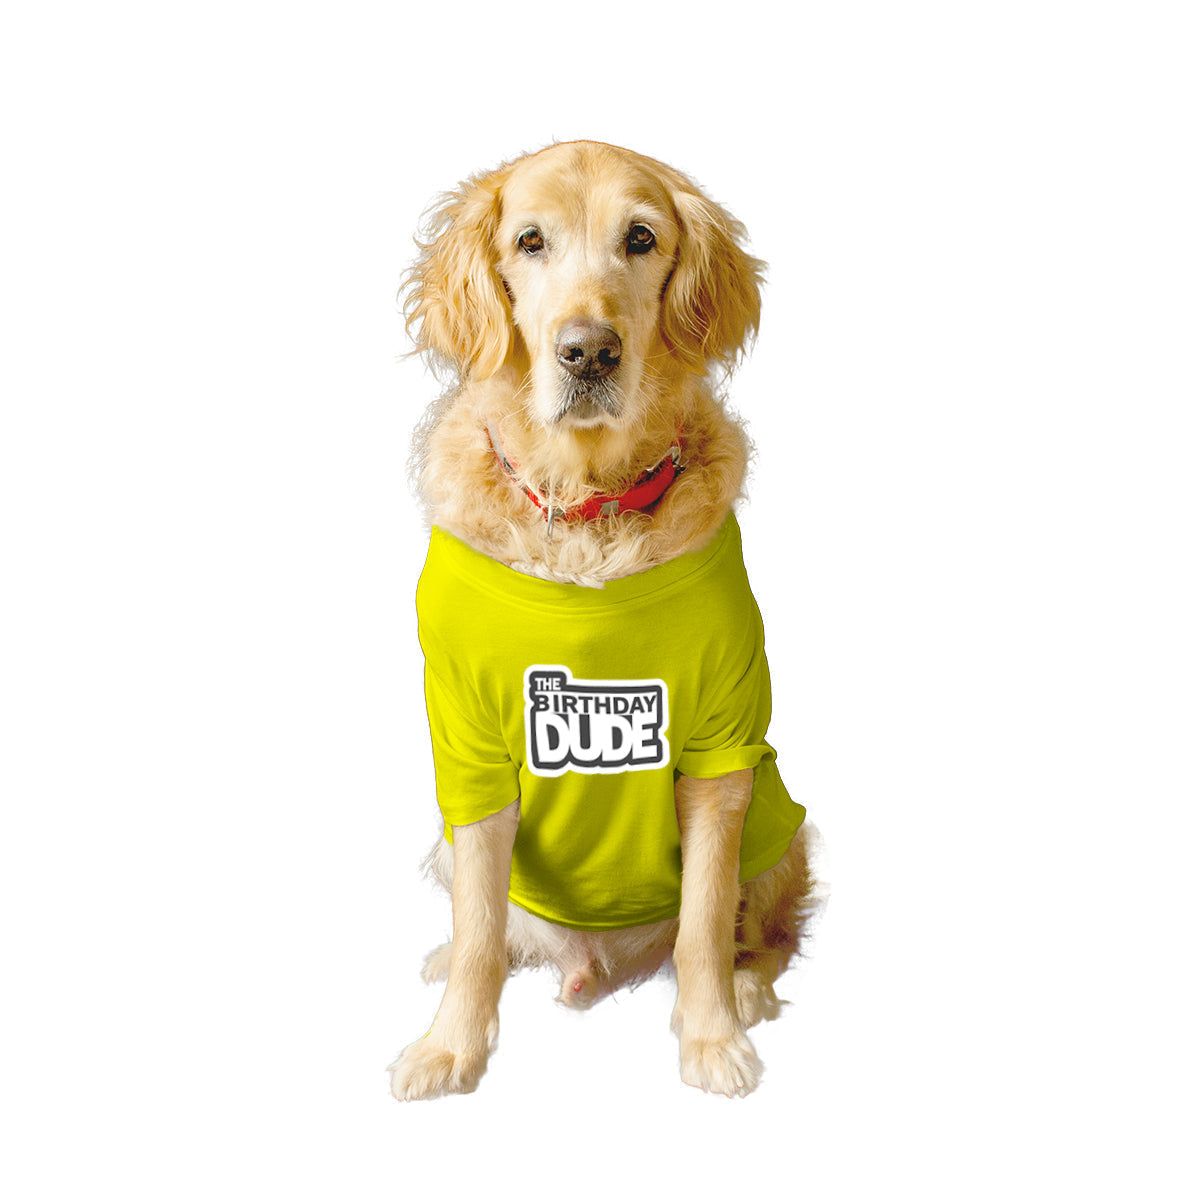 Ruse XX-Small (Chihuahuas, Papillons) / Yellow Ruse Basic Crew Neck 'The Birthday Dude' Printed Half Sleeves Dog Tee4